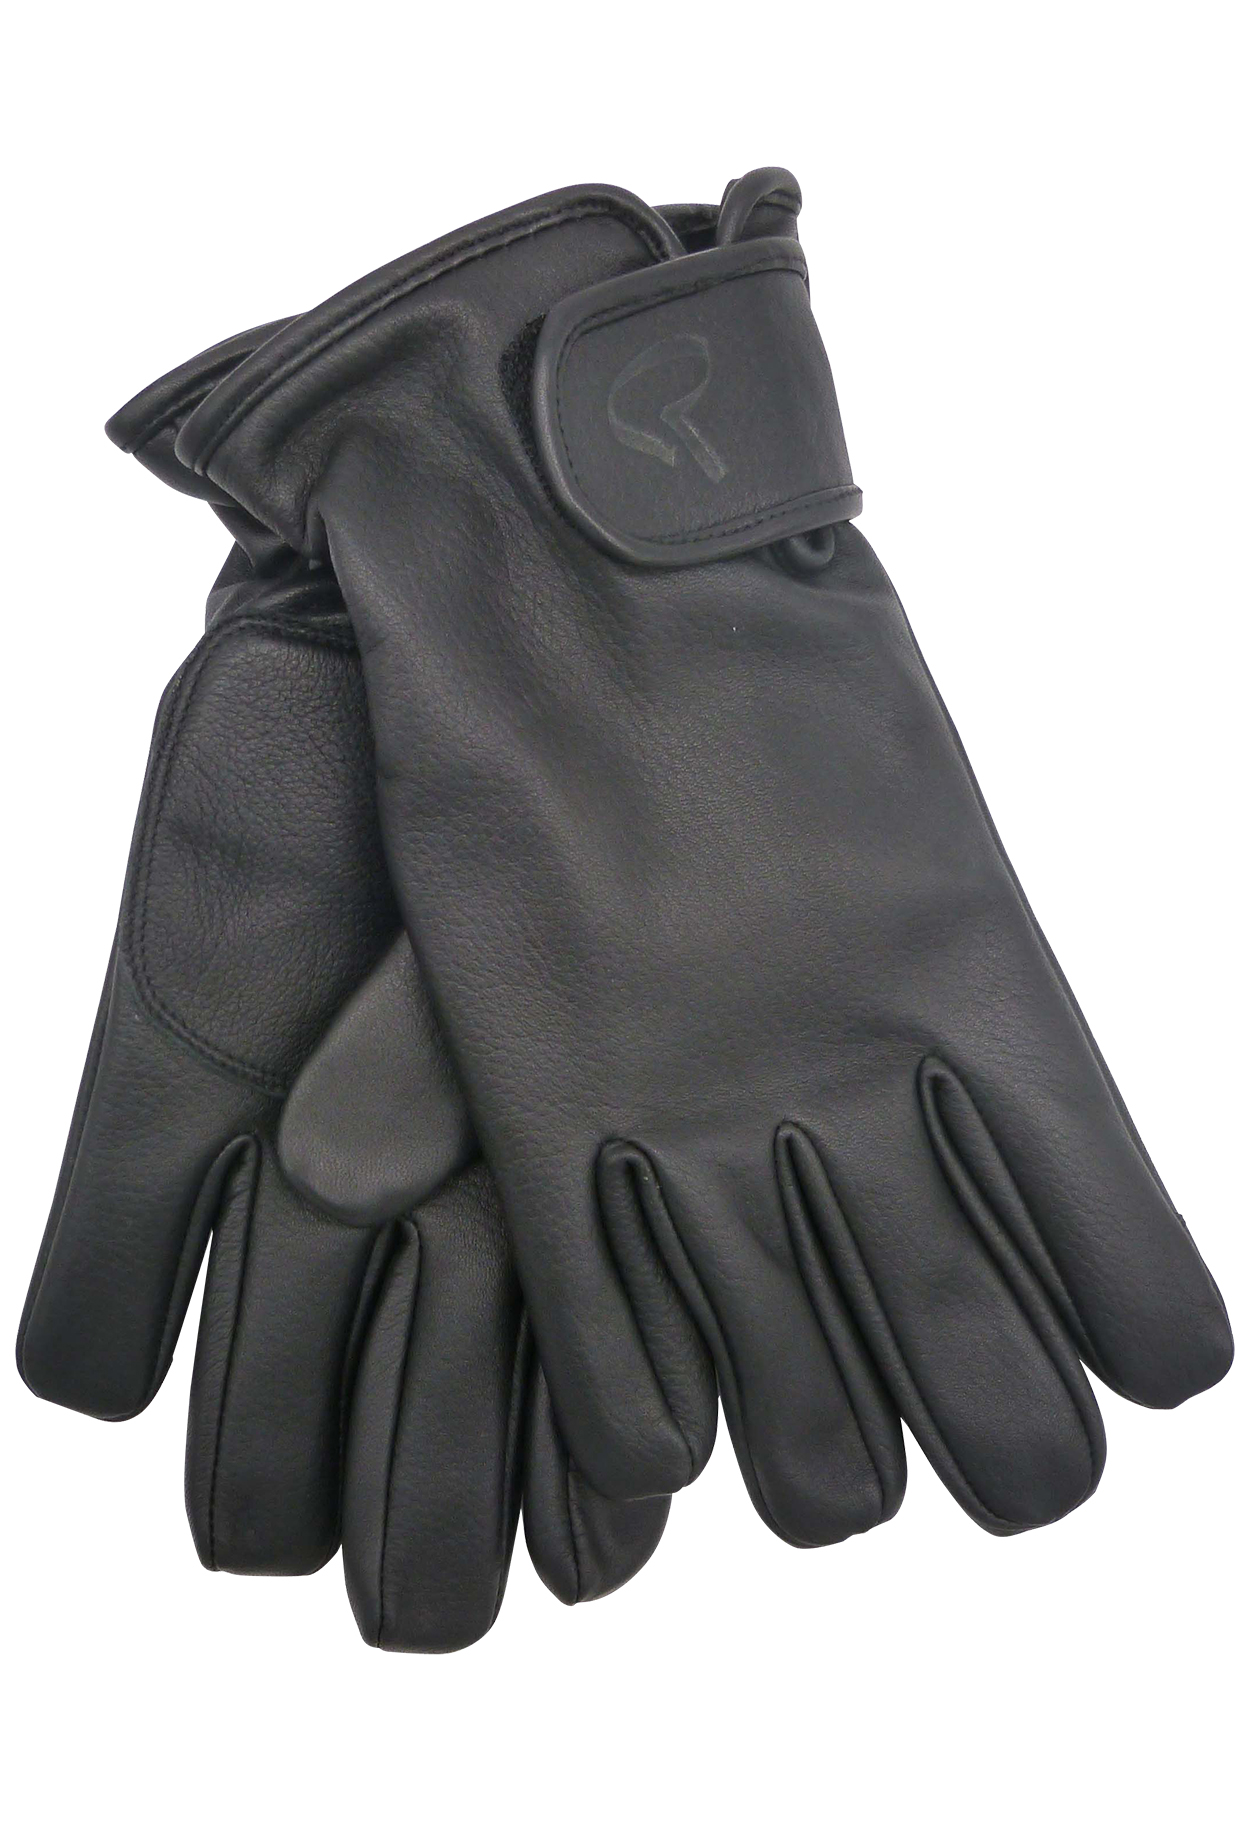 gants redskins noirs